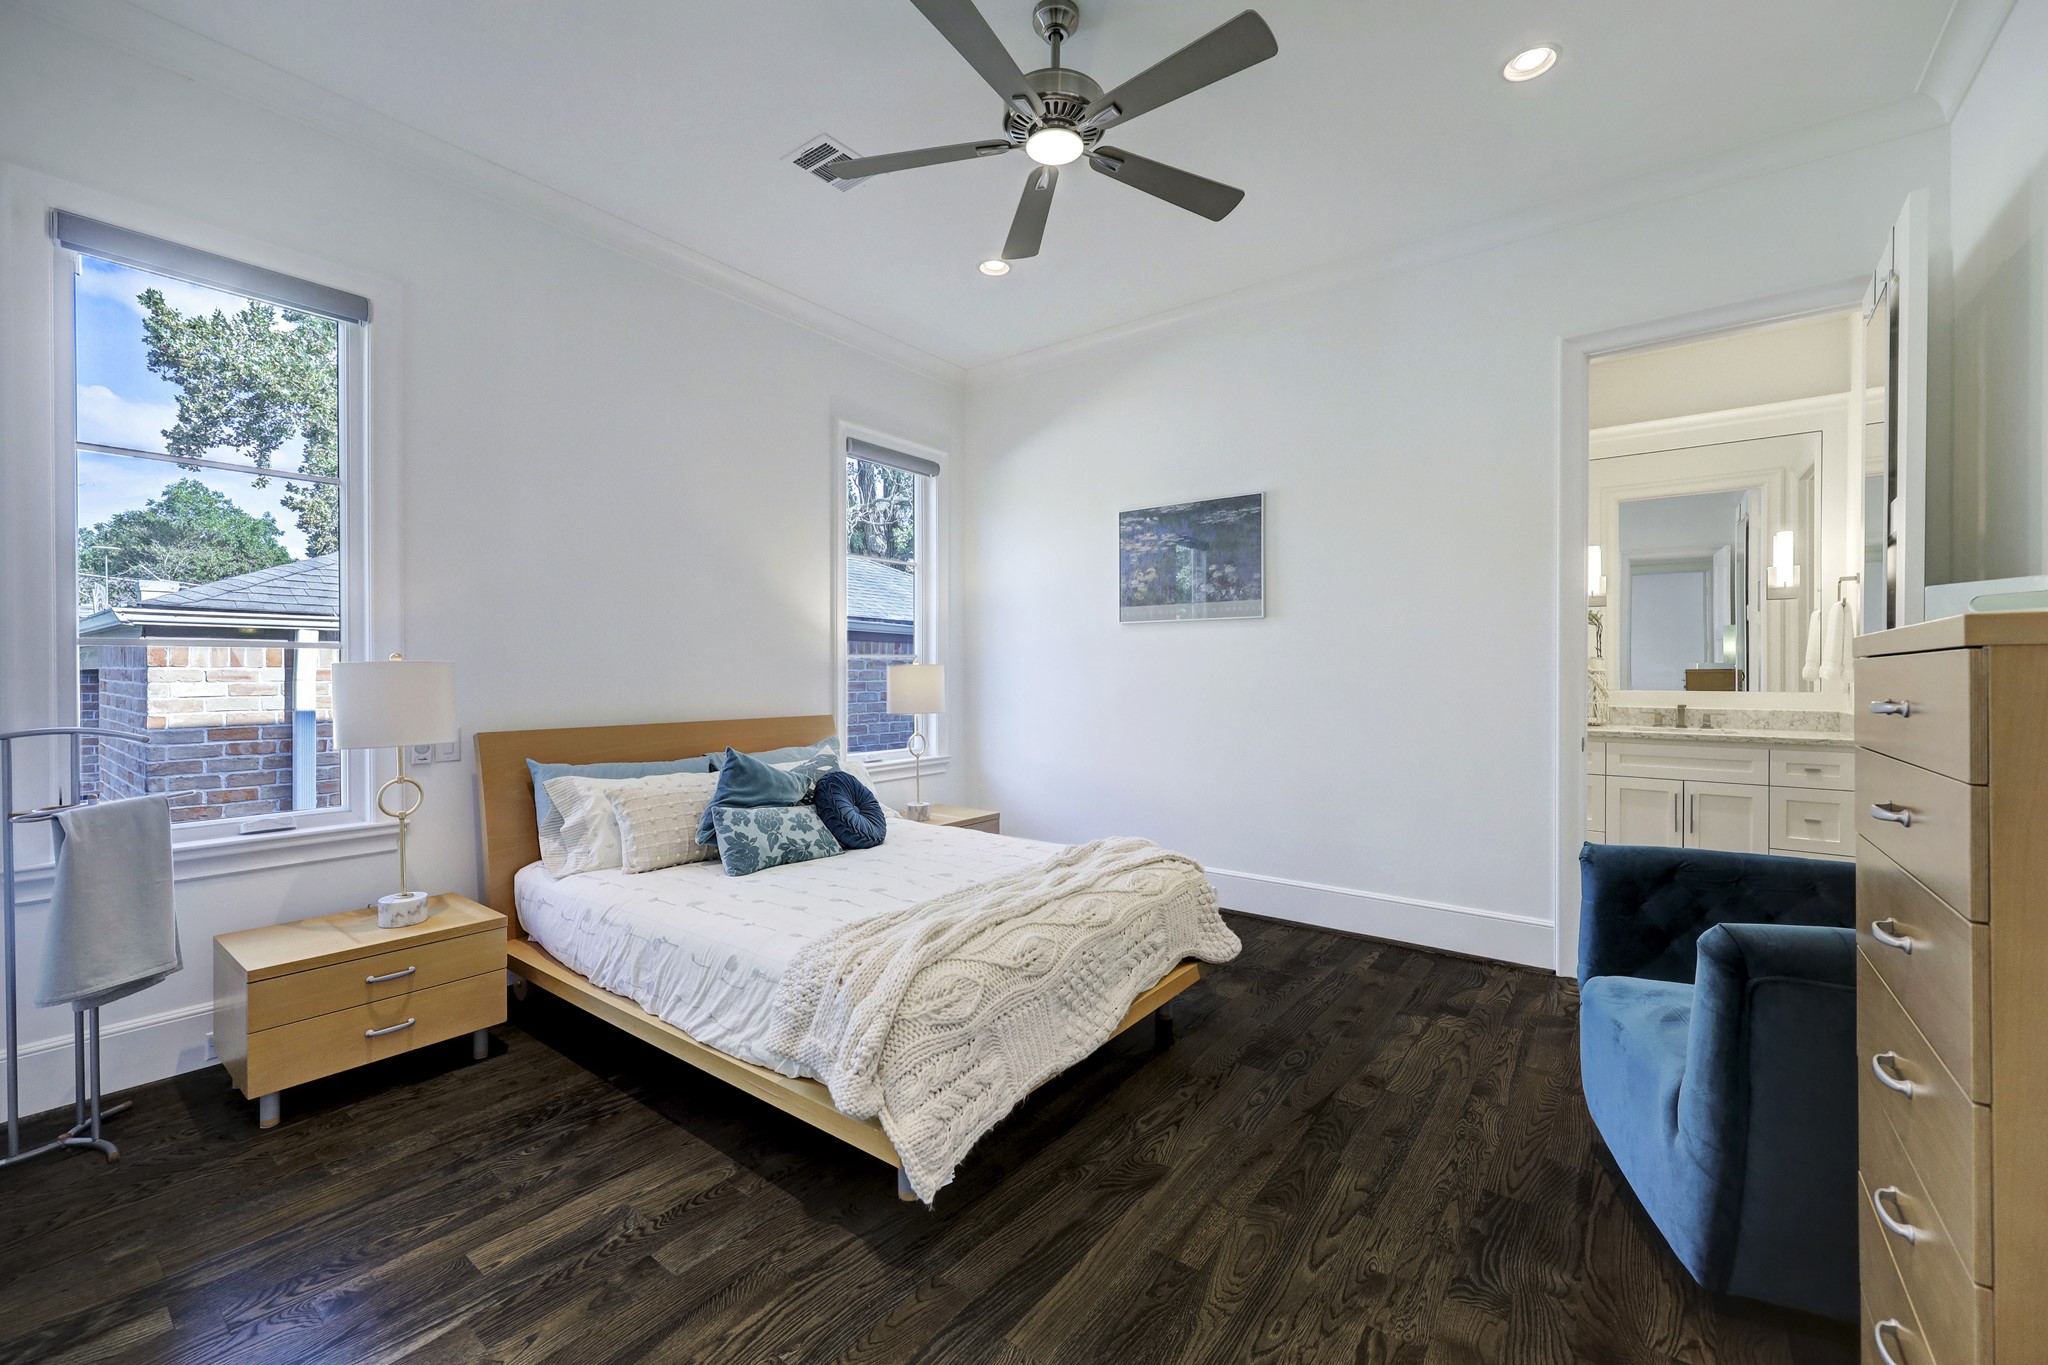 Cozy guest suite with Minka Aire ceiling fan plus light, Graber remote-controlled
shades, en-suite bath, and vast custom-built walk-in closet.